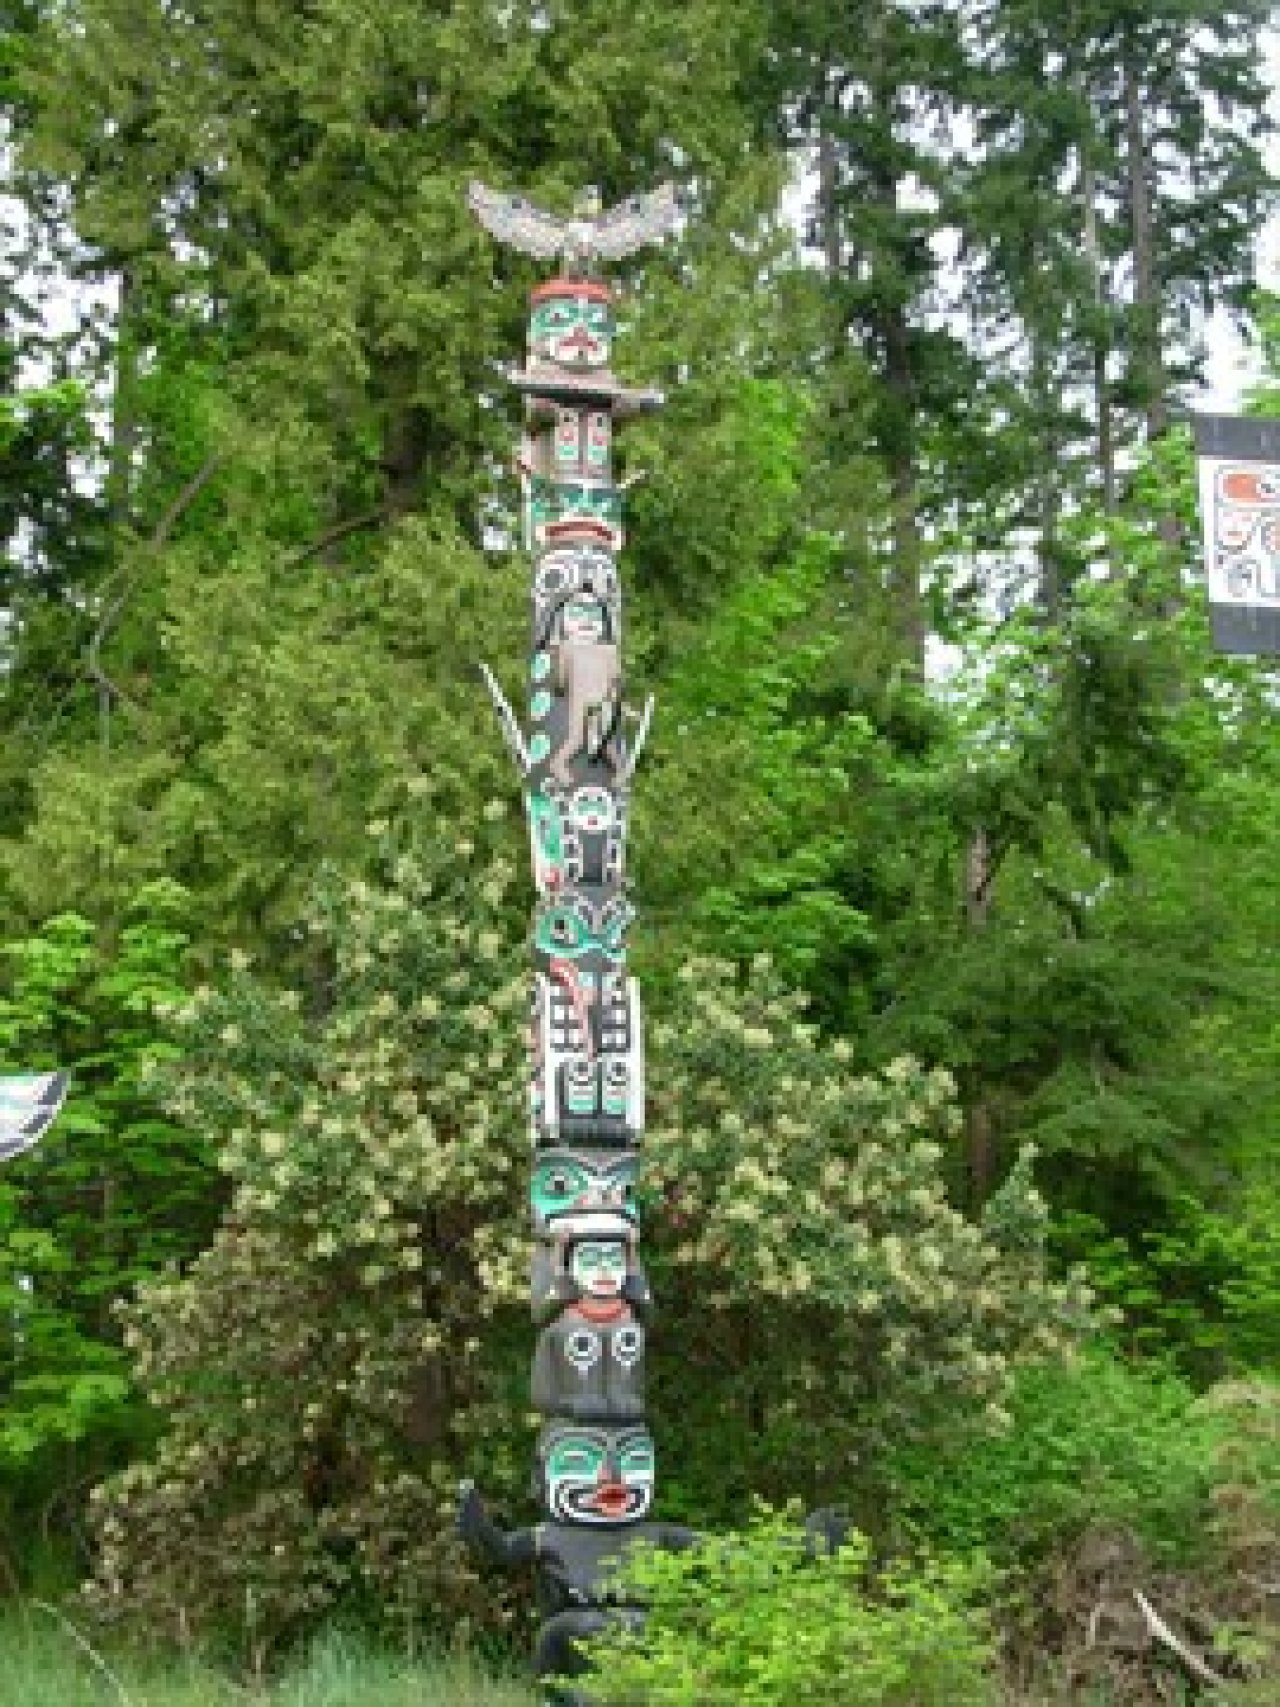 Ga'akstalas Totem Pole. Source: http://stanleyparkvan.com/stanley-park-van-attractions-totem-poles.html